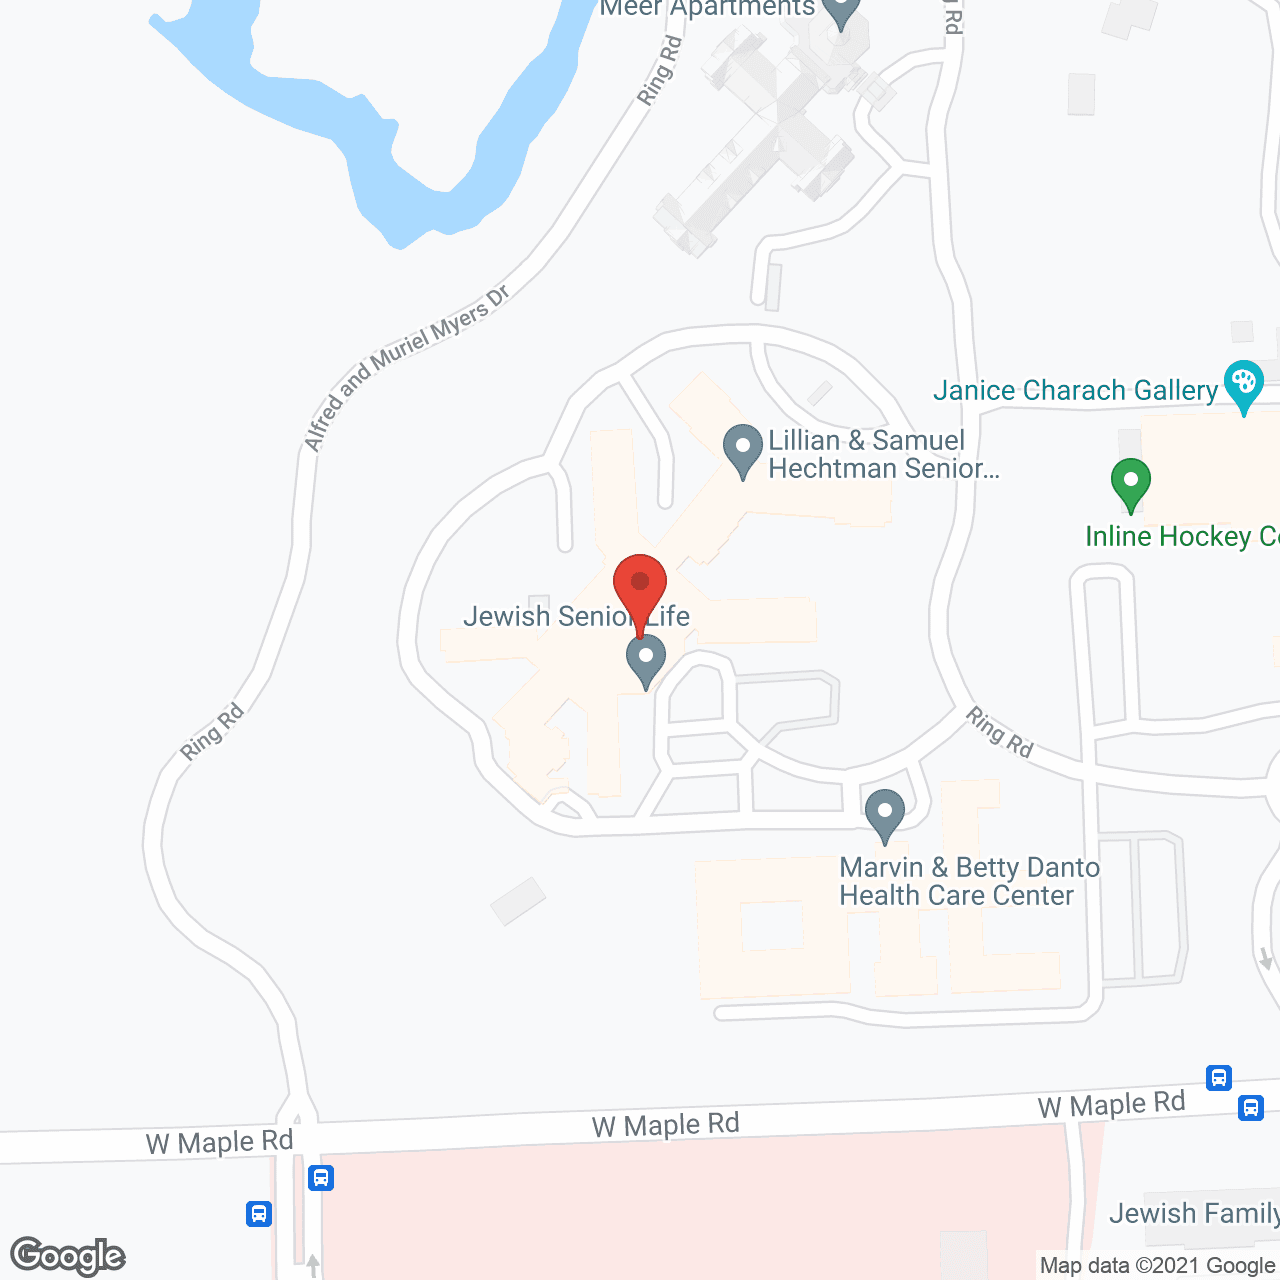 Fleischman Residence in google map